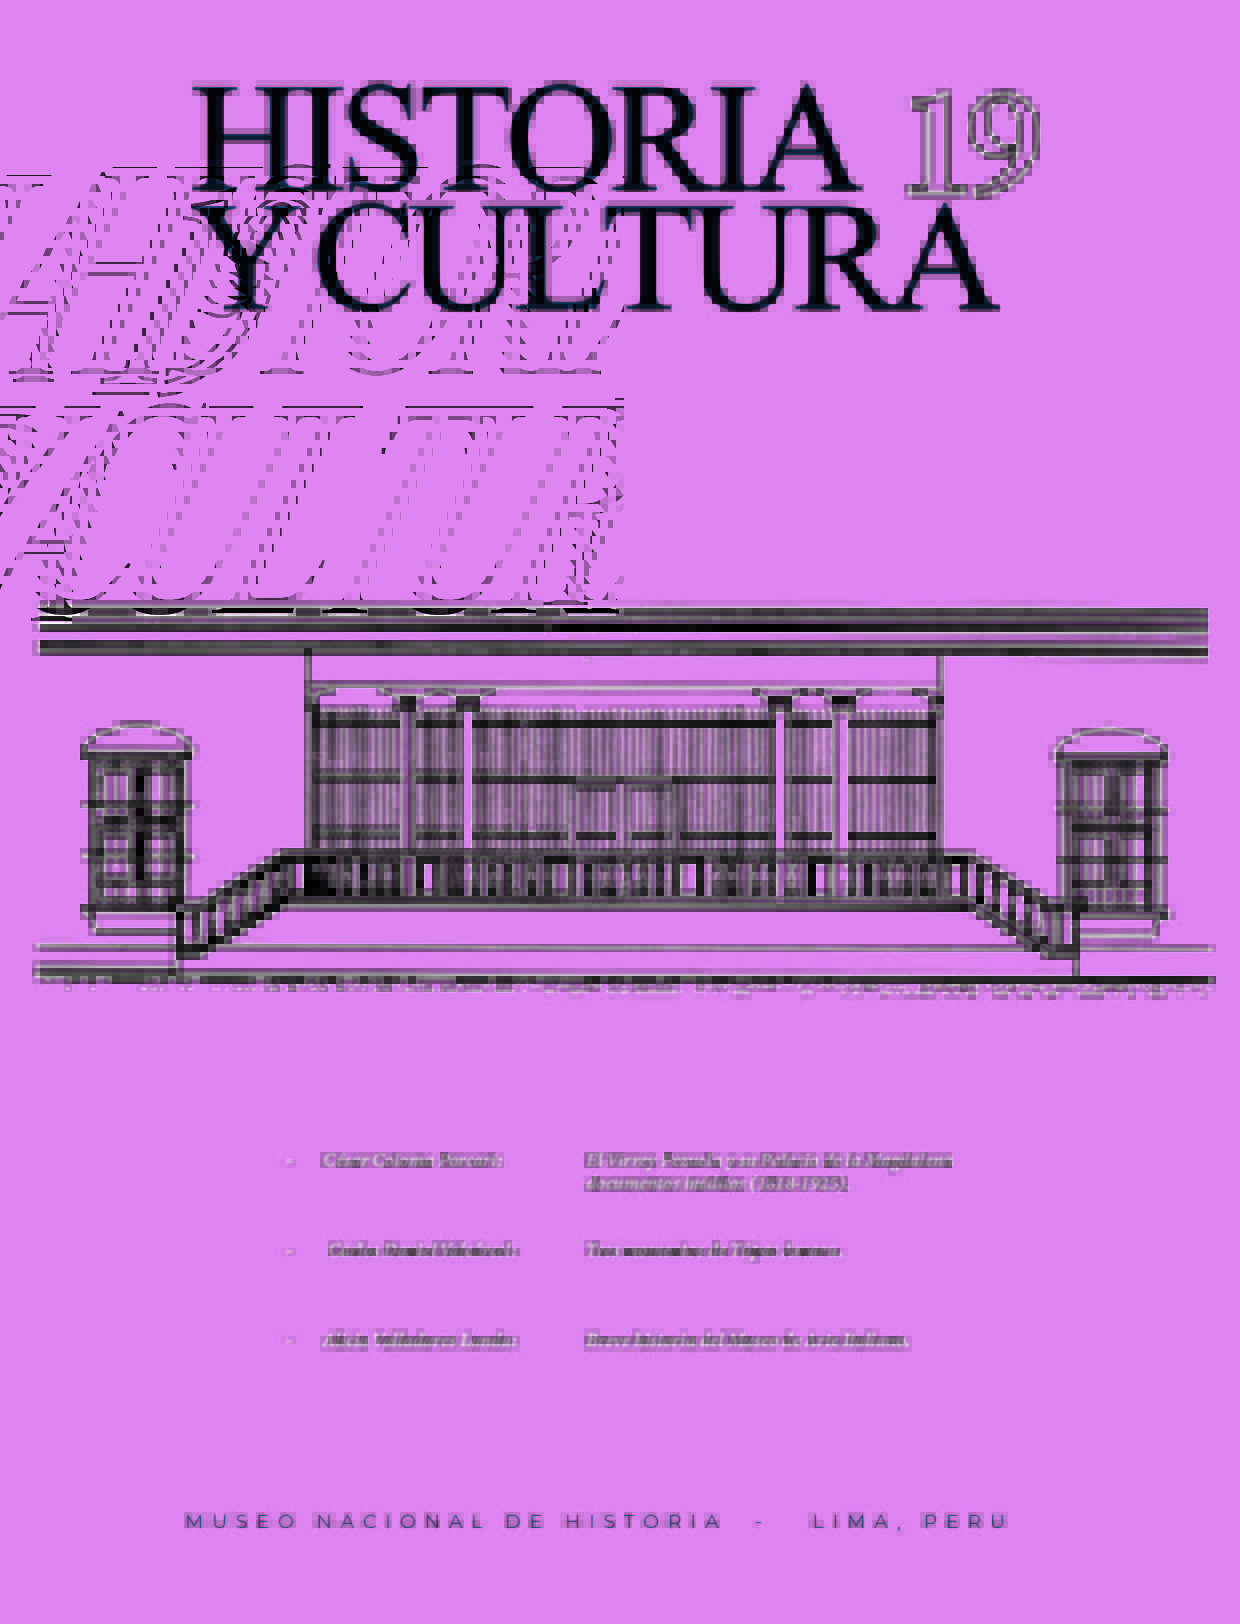 					Ver Núm. 19 (1989): Historia y Cultura 19
				